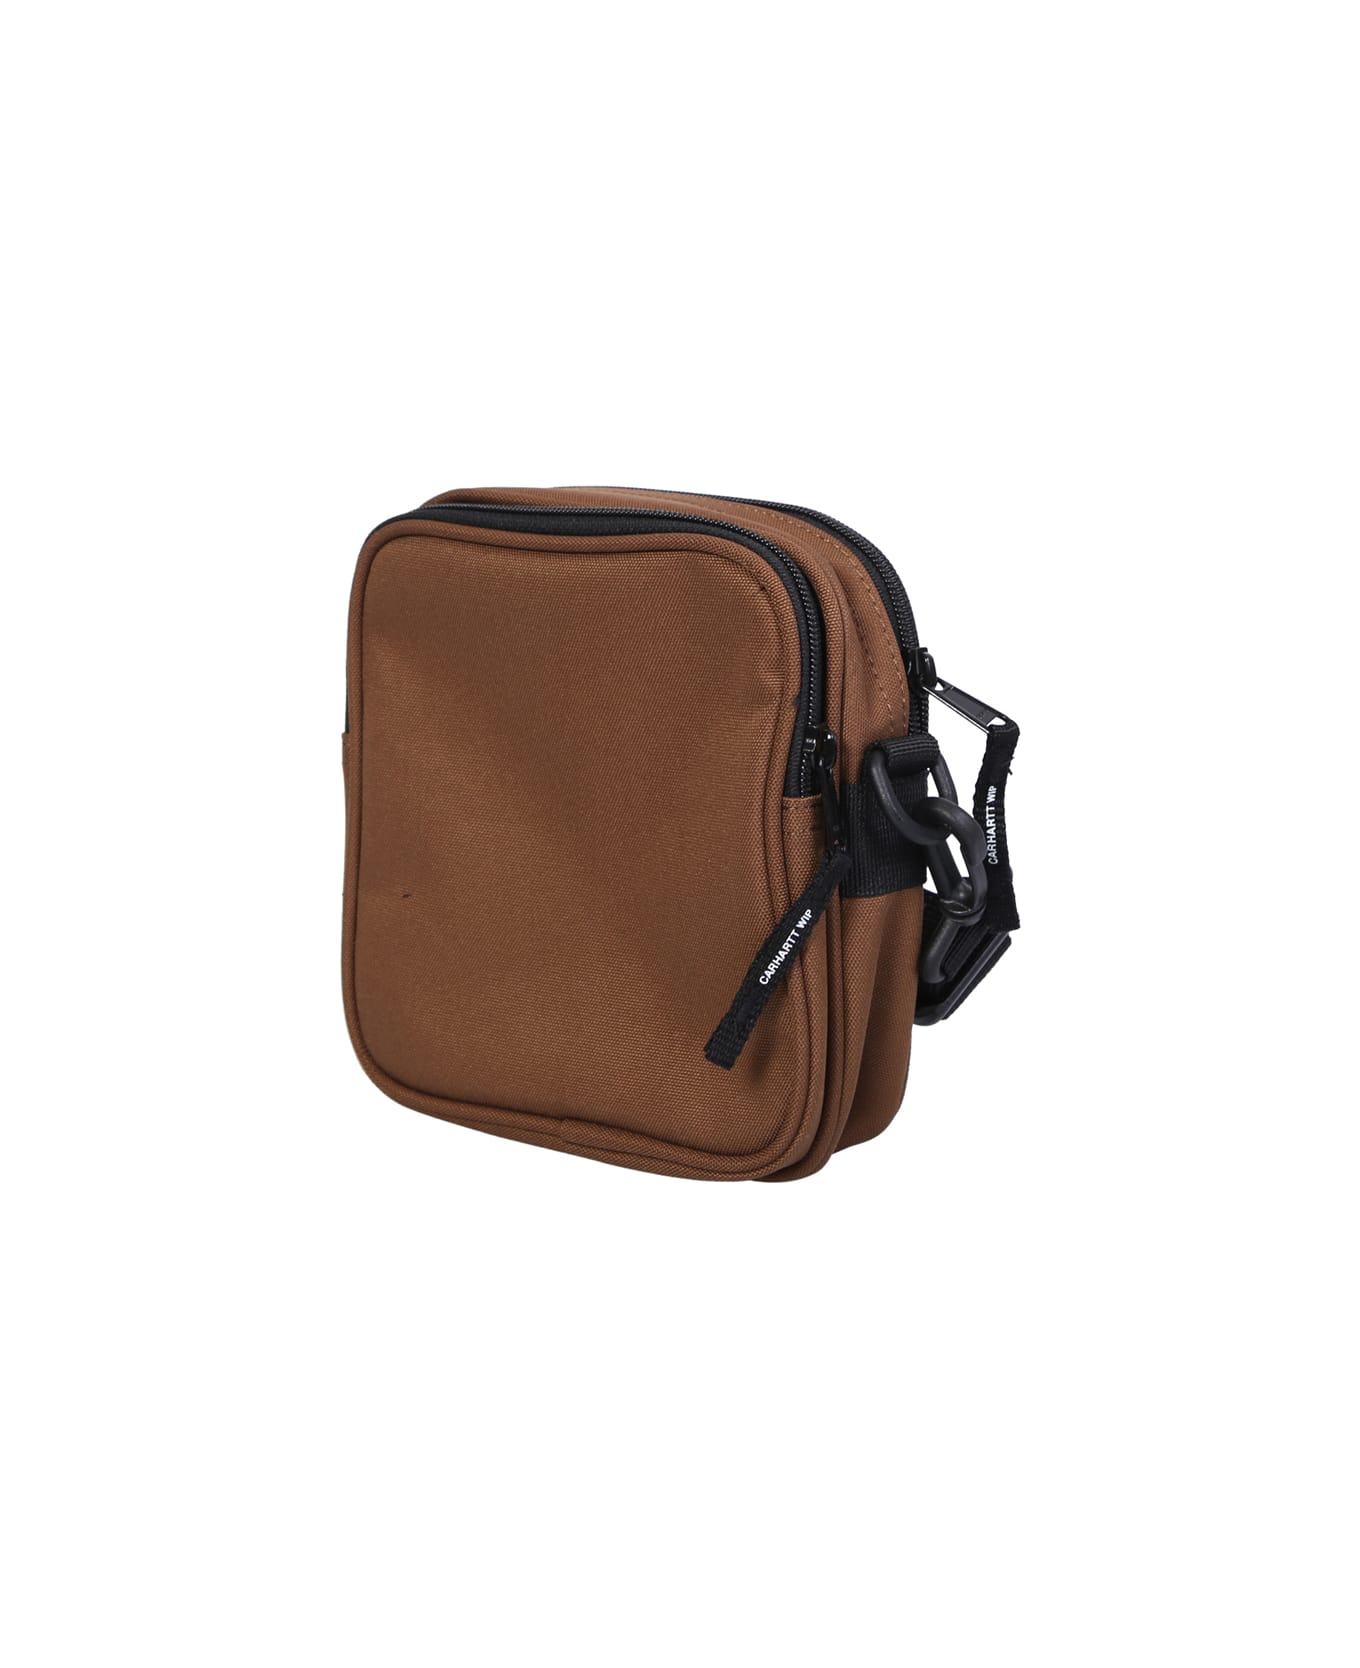 Carhartt Essential Small Shoulder Bag Camel - Brown